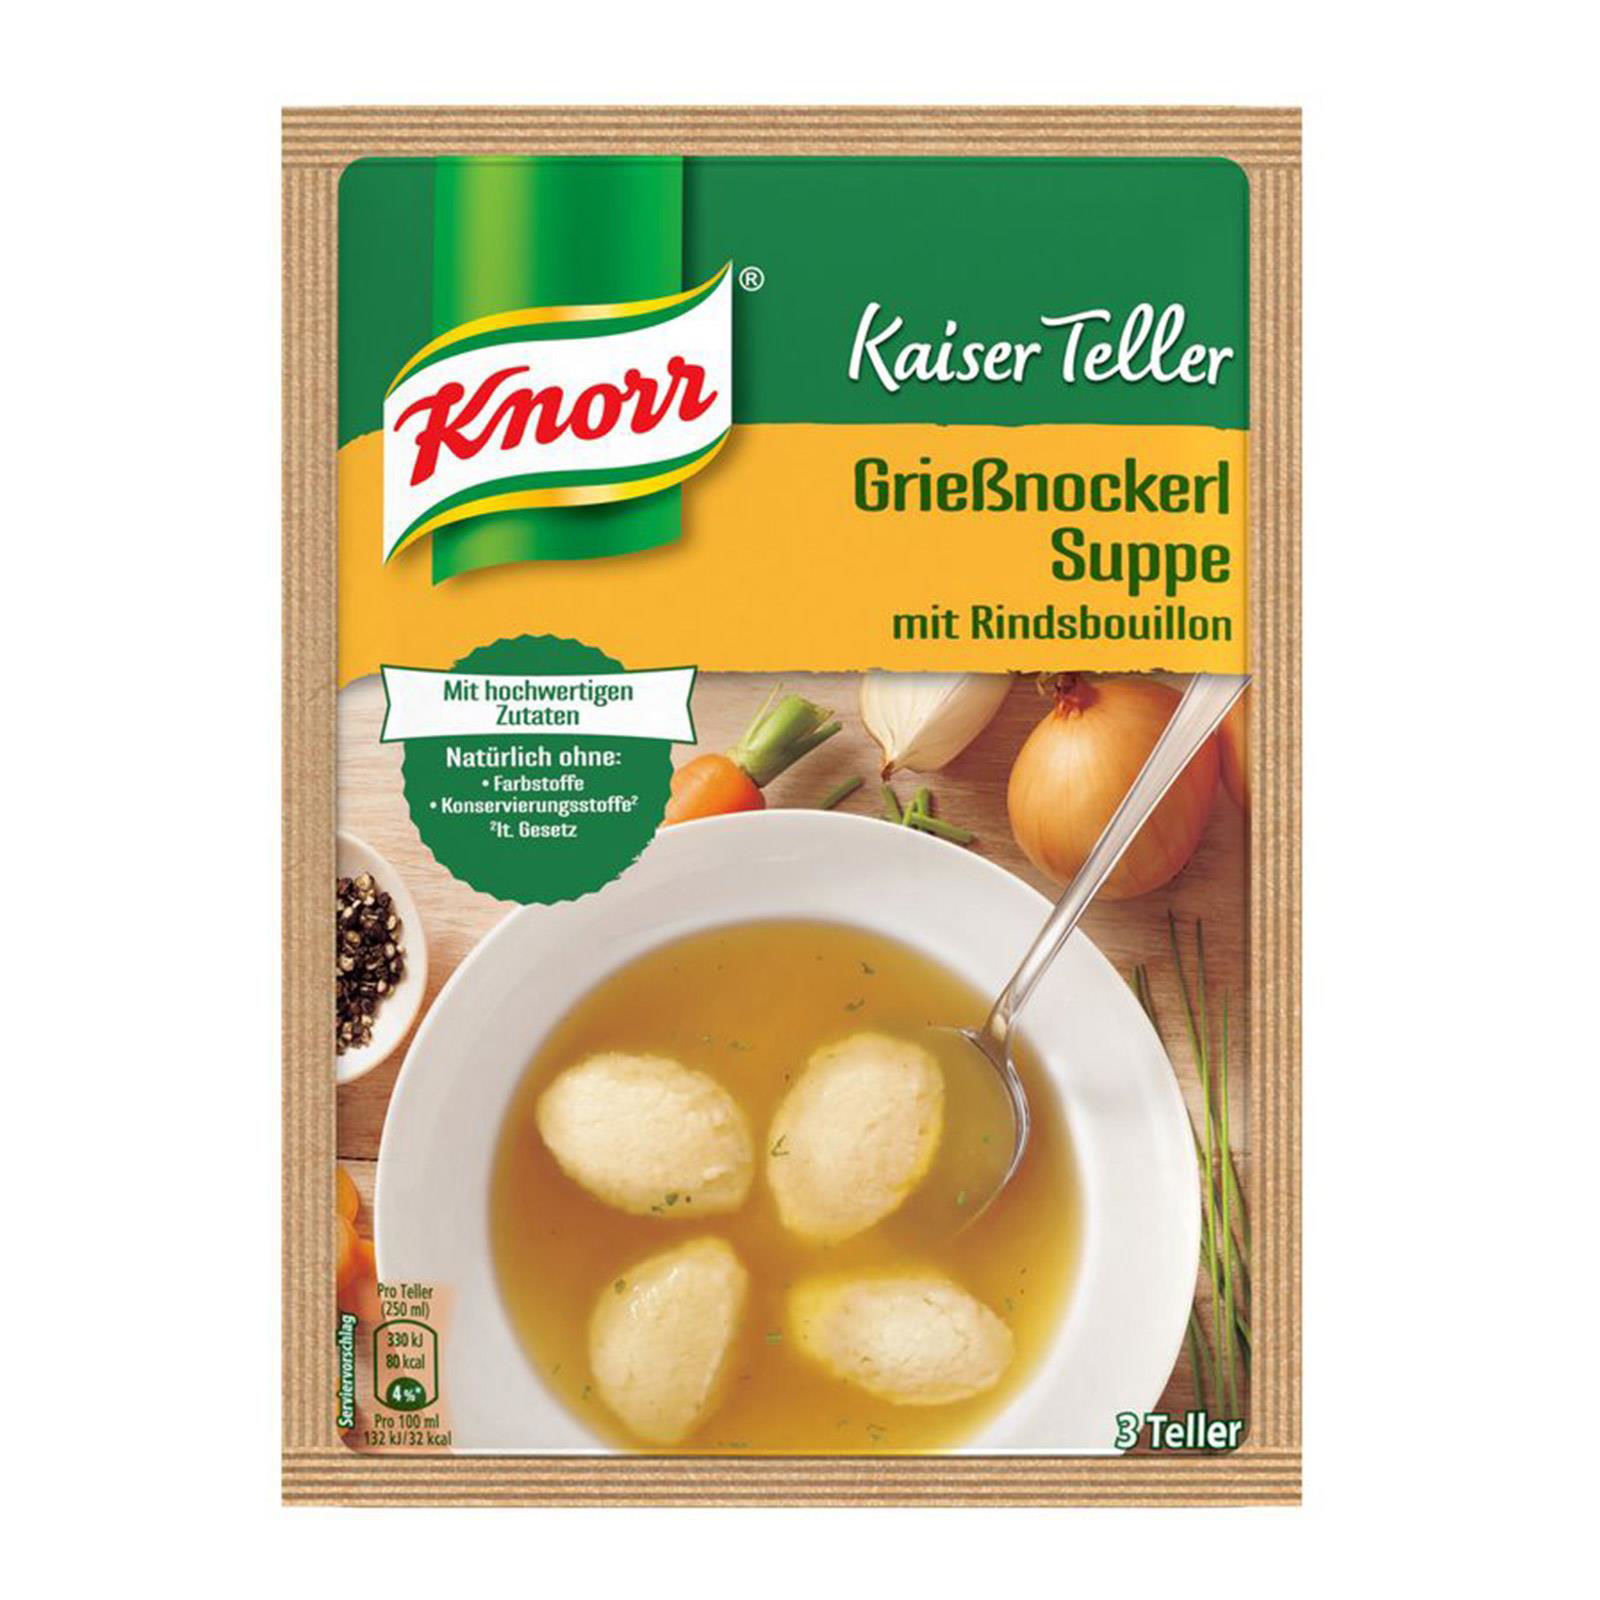 Austrian Food, Drink and Home UK. Knorr Kaiserteller Grießnockerlsuppee ...